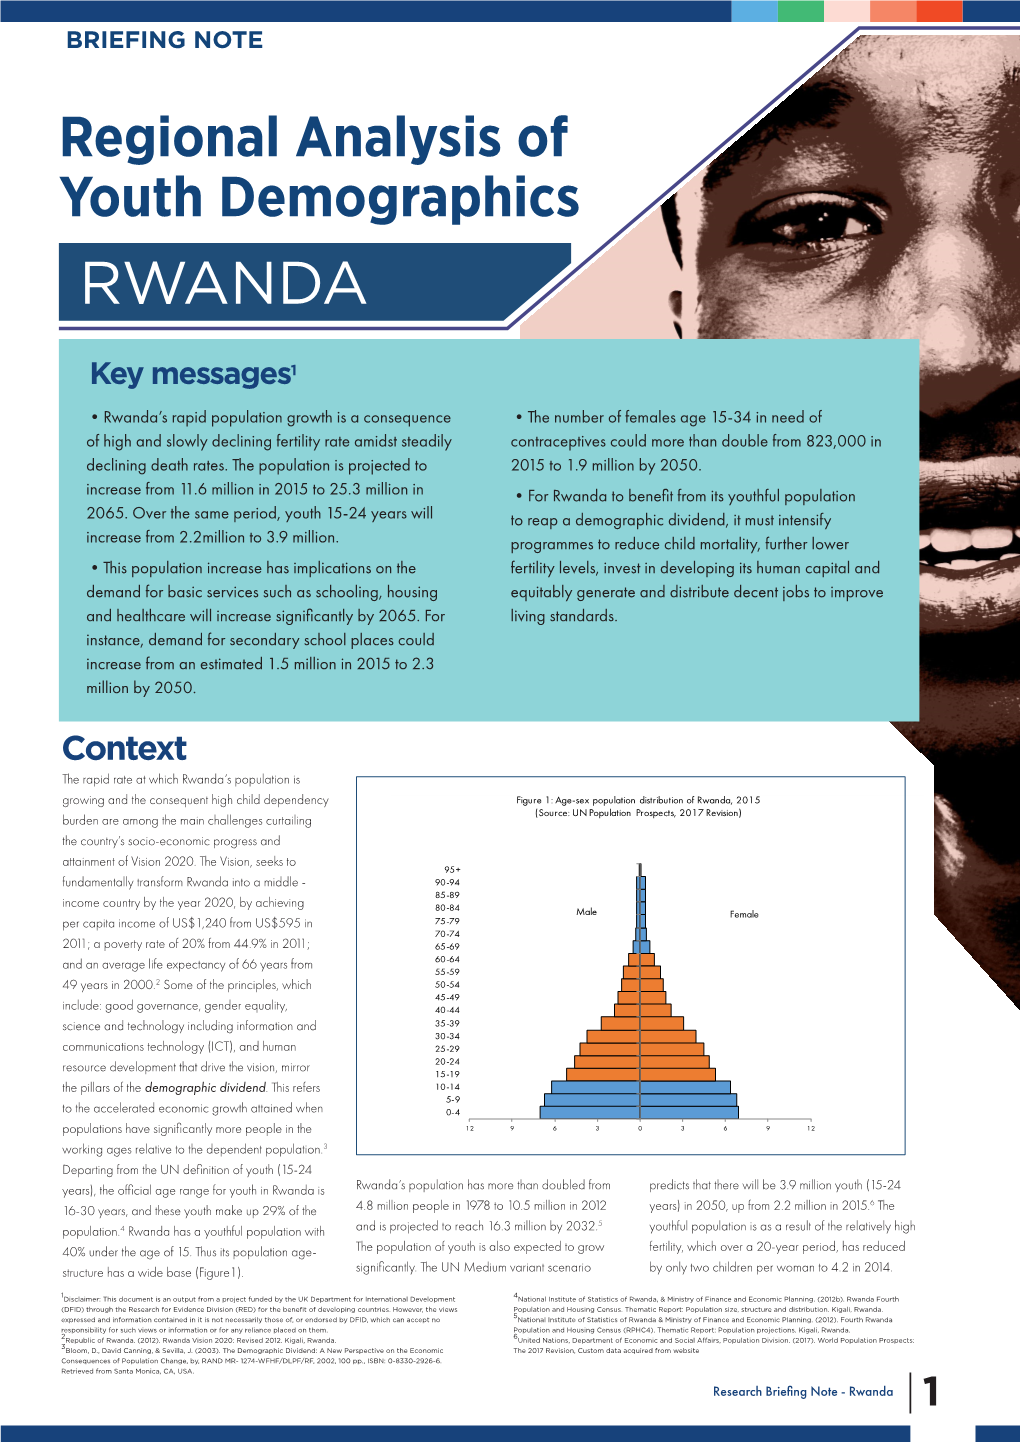 Briefing Note: Regional Analysis of Youth Demographics in Rwanda